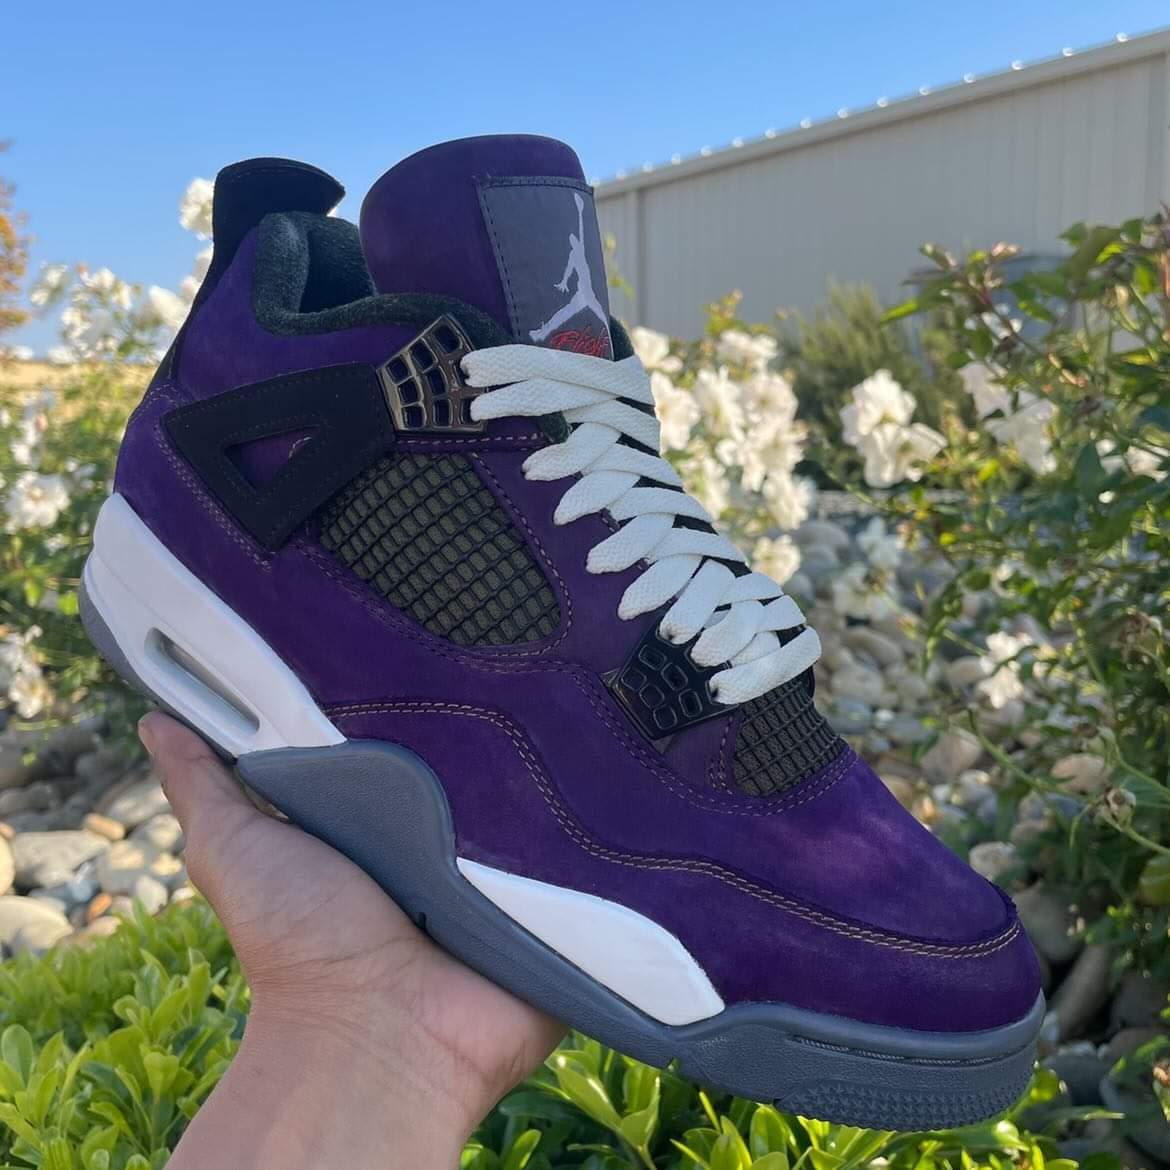 Jordan 4 Customized purple - Featured Sneakers - Sneaker Procedure US